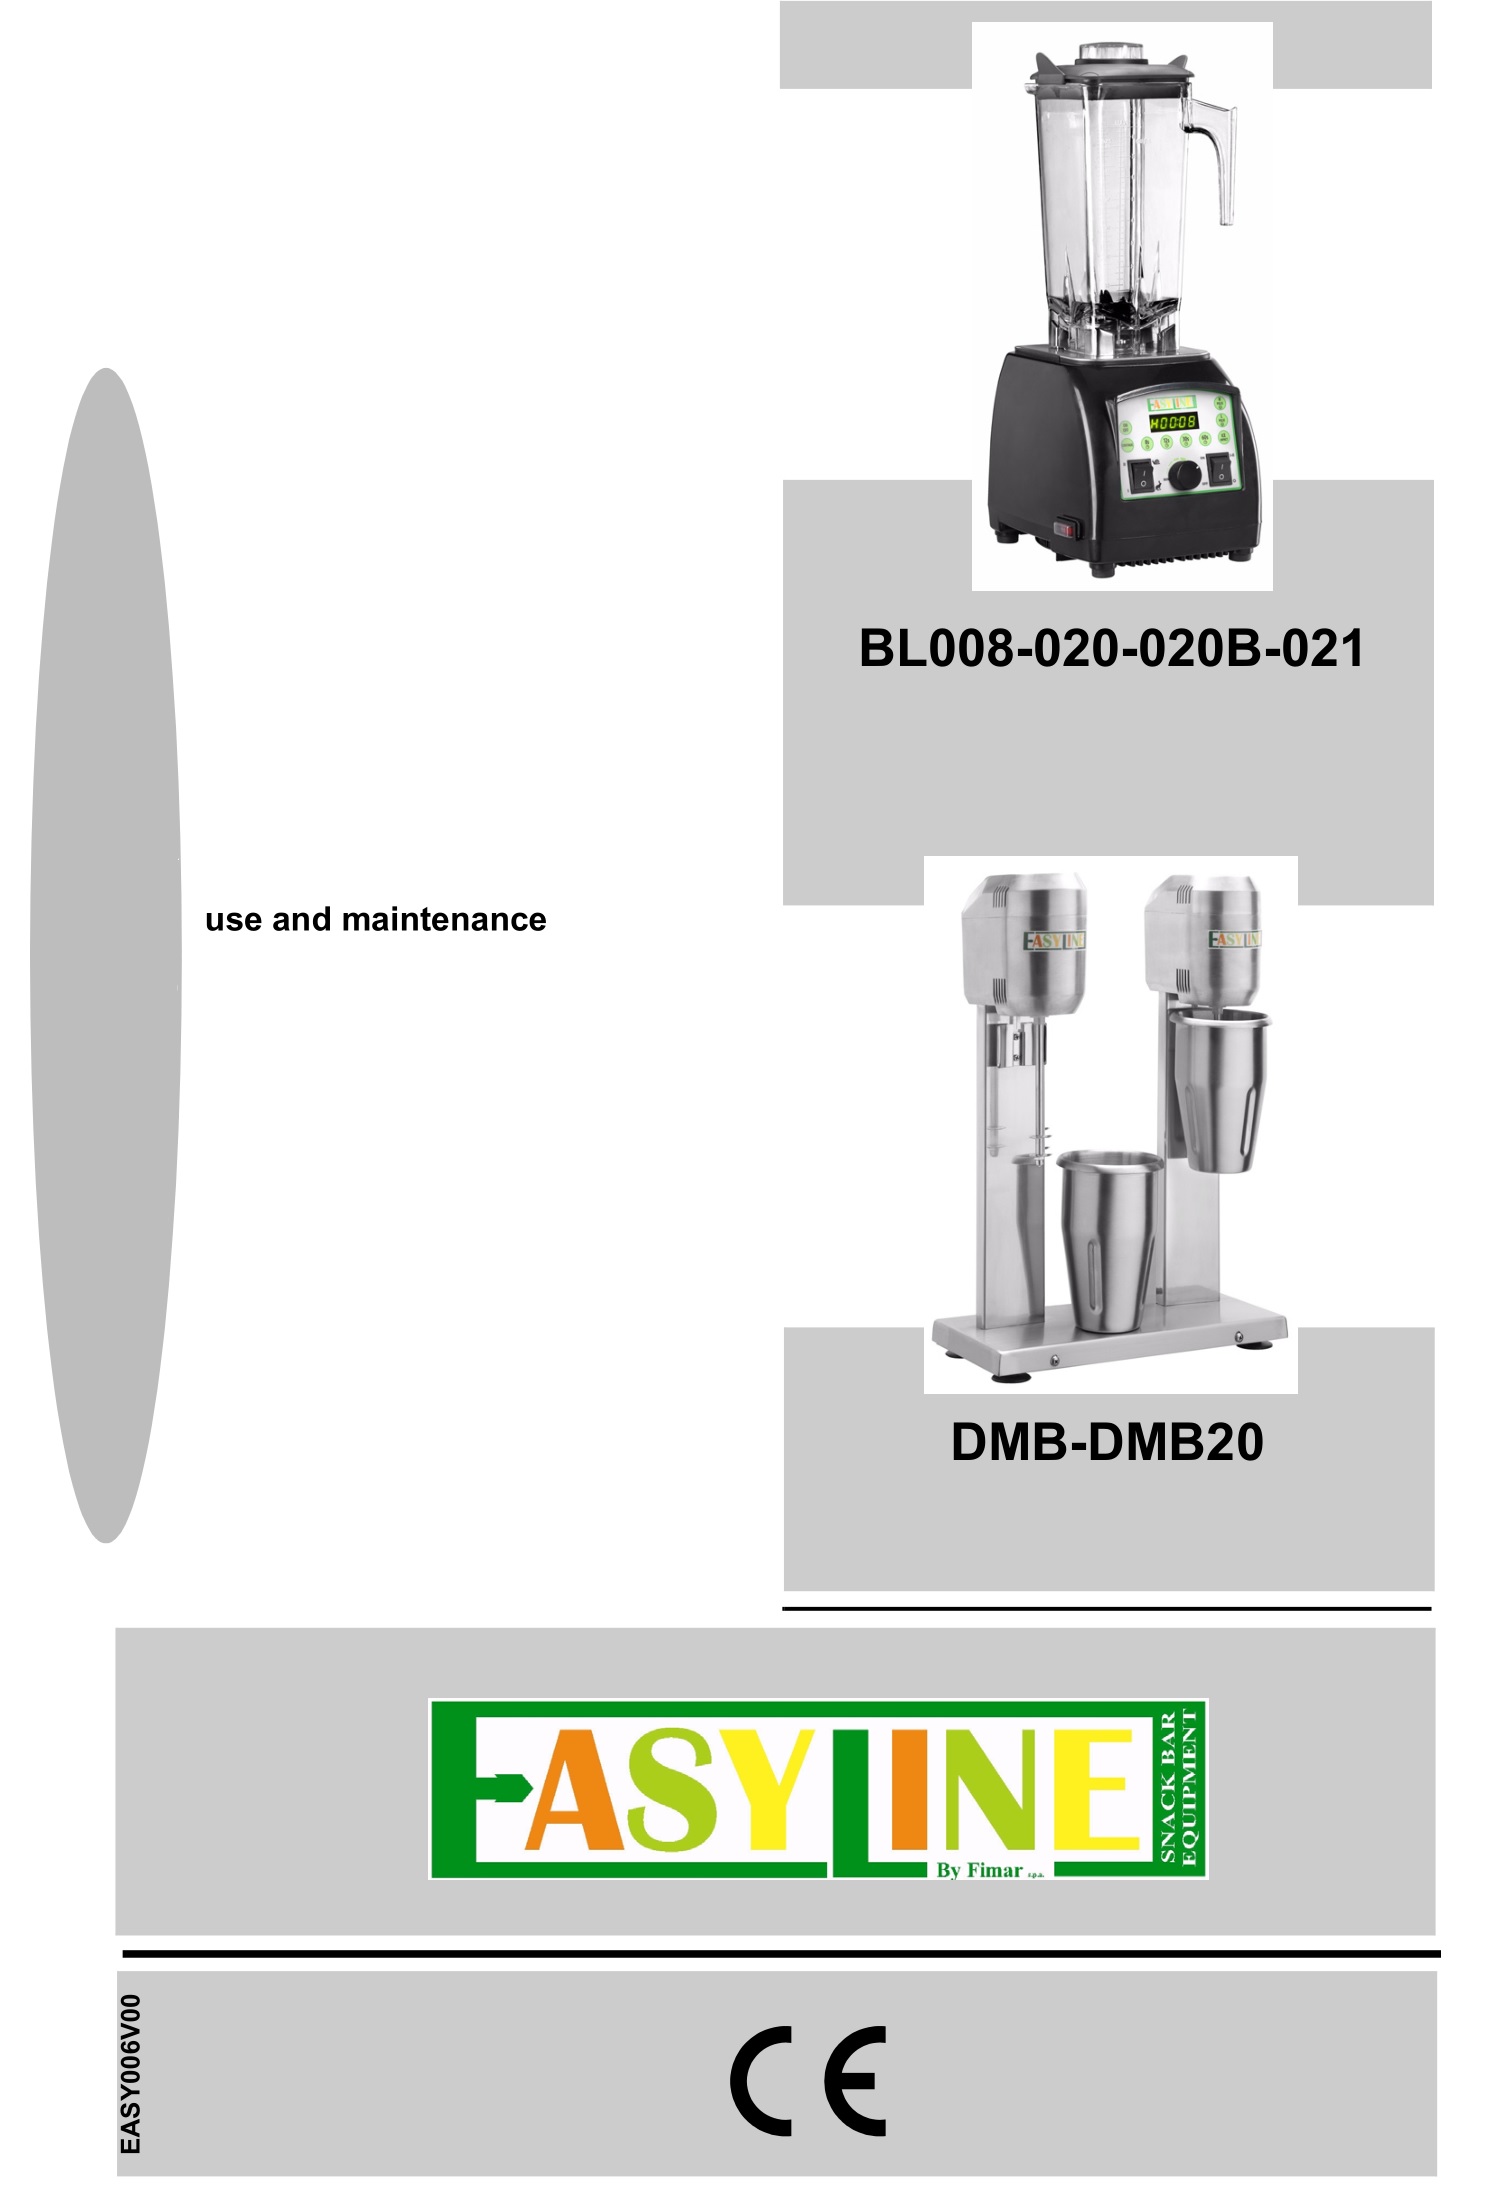 EASYLINE DMBPDF Milkshake Mixer User Manual